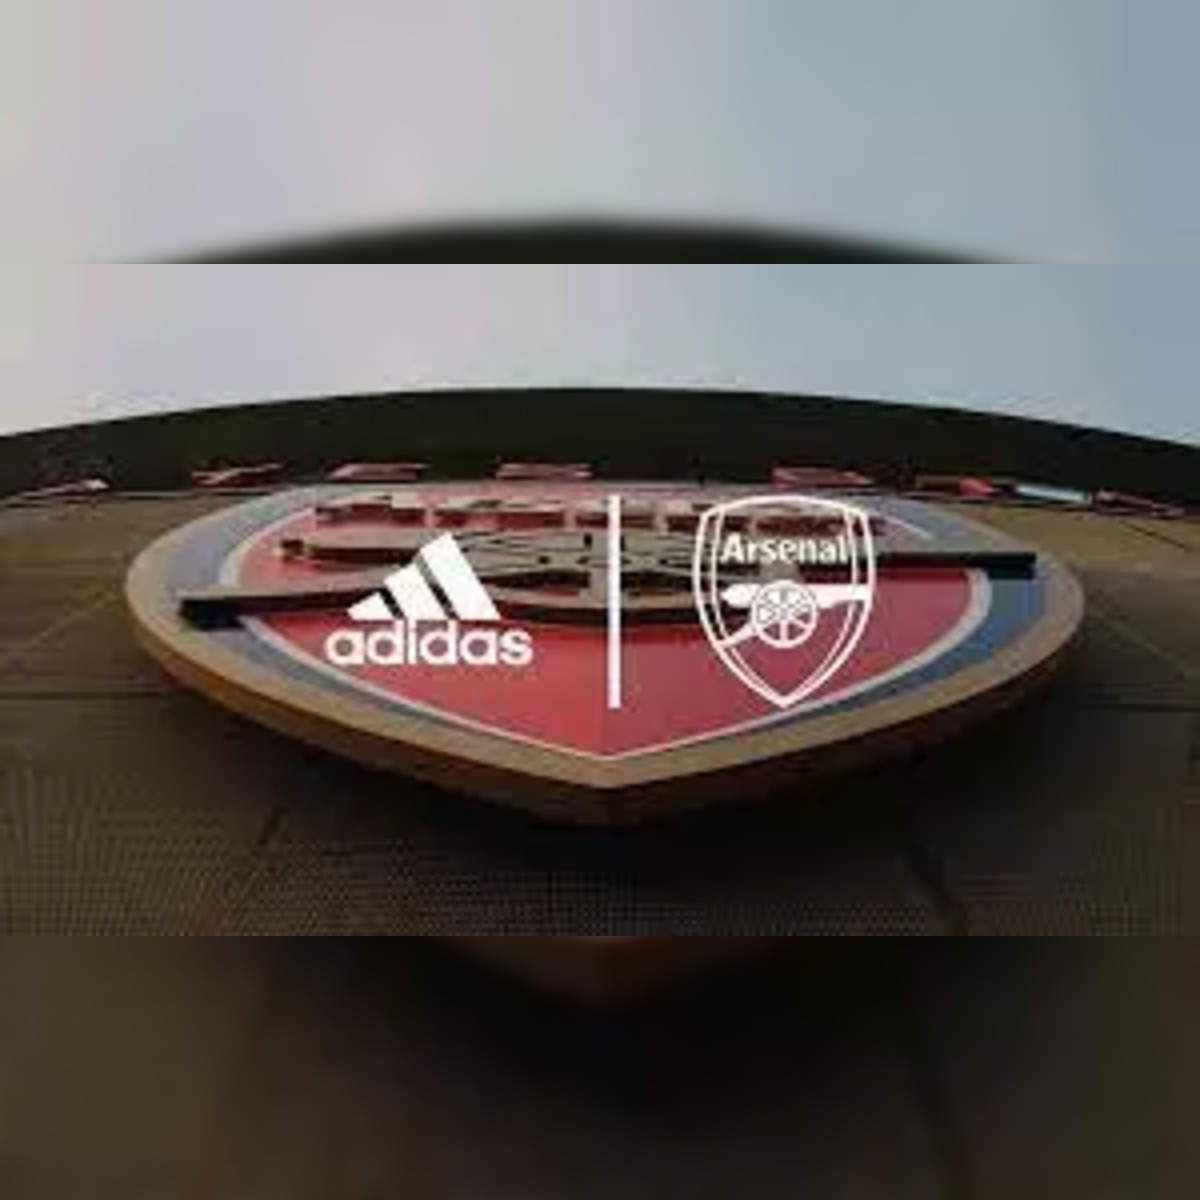 Arsenal x adidas Limited Edition